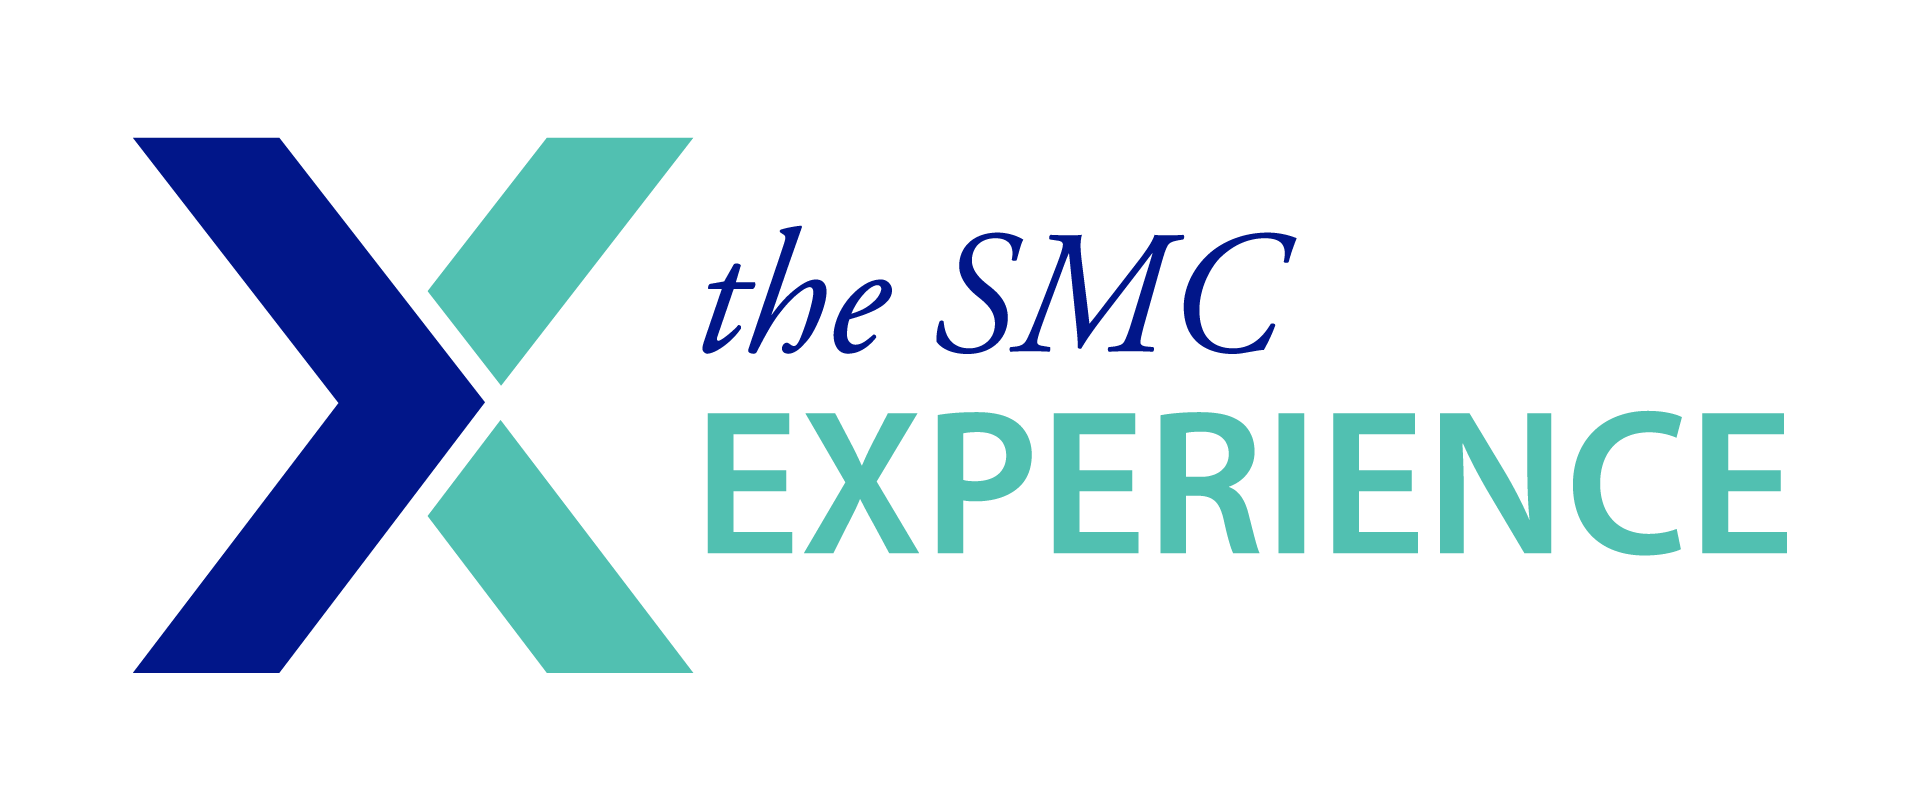 The SMC Experience